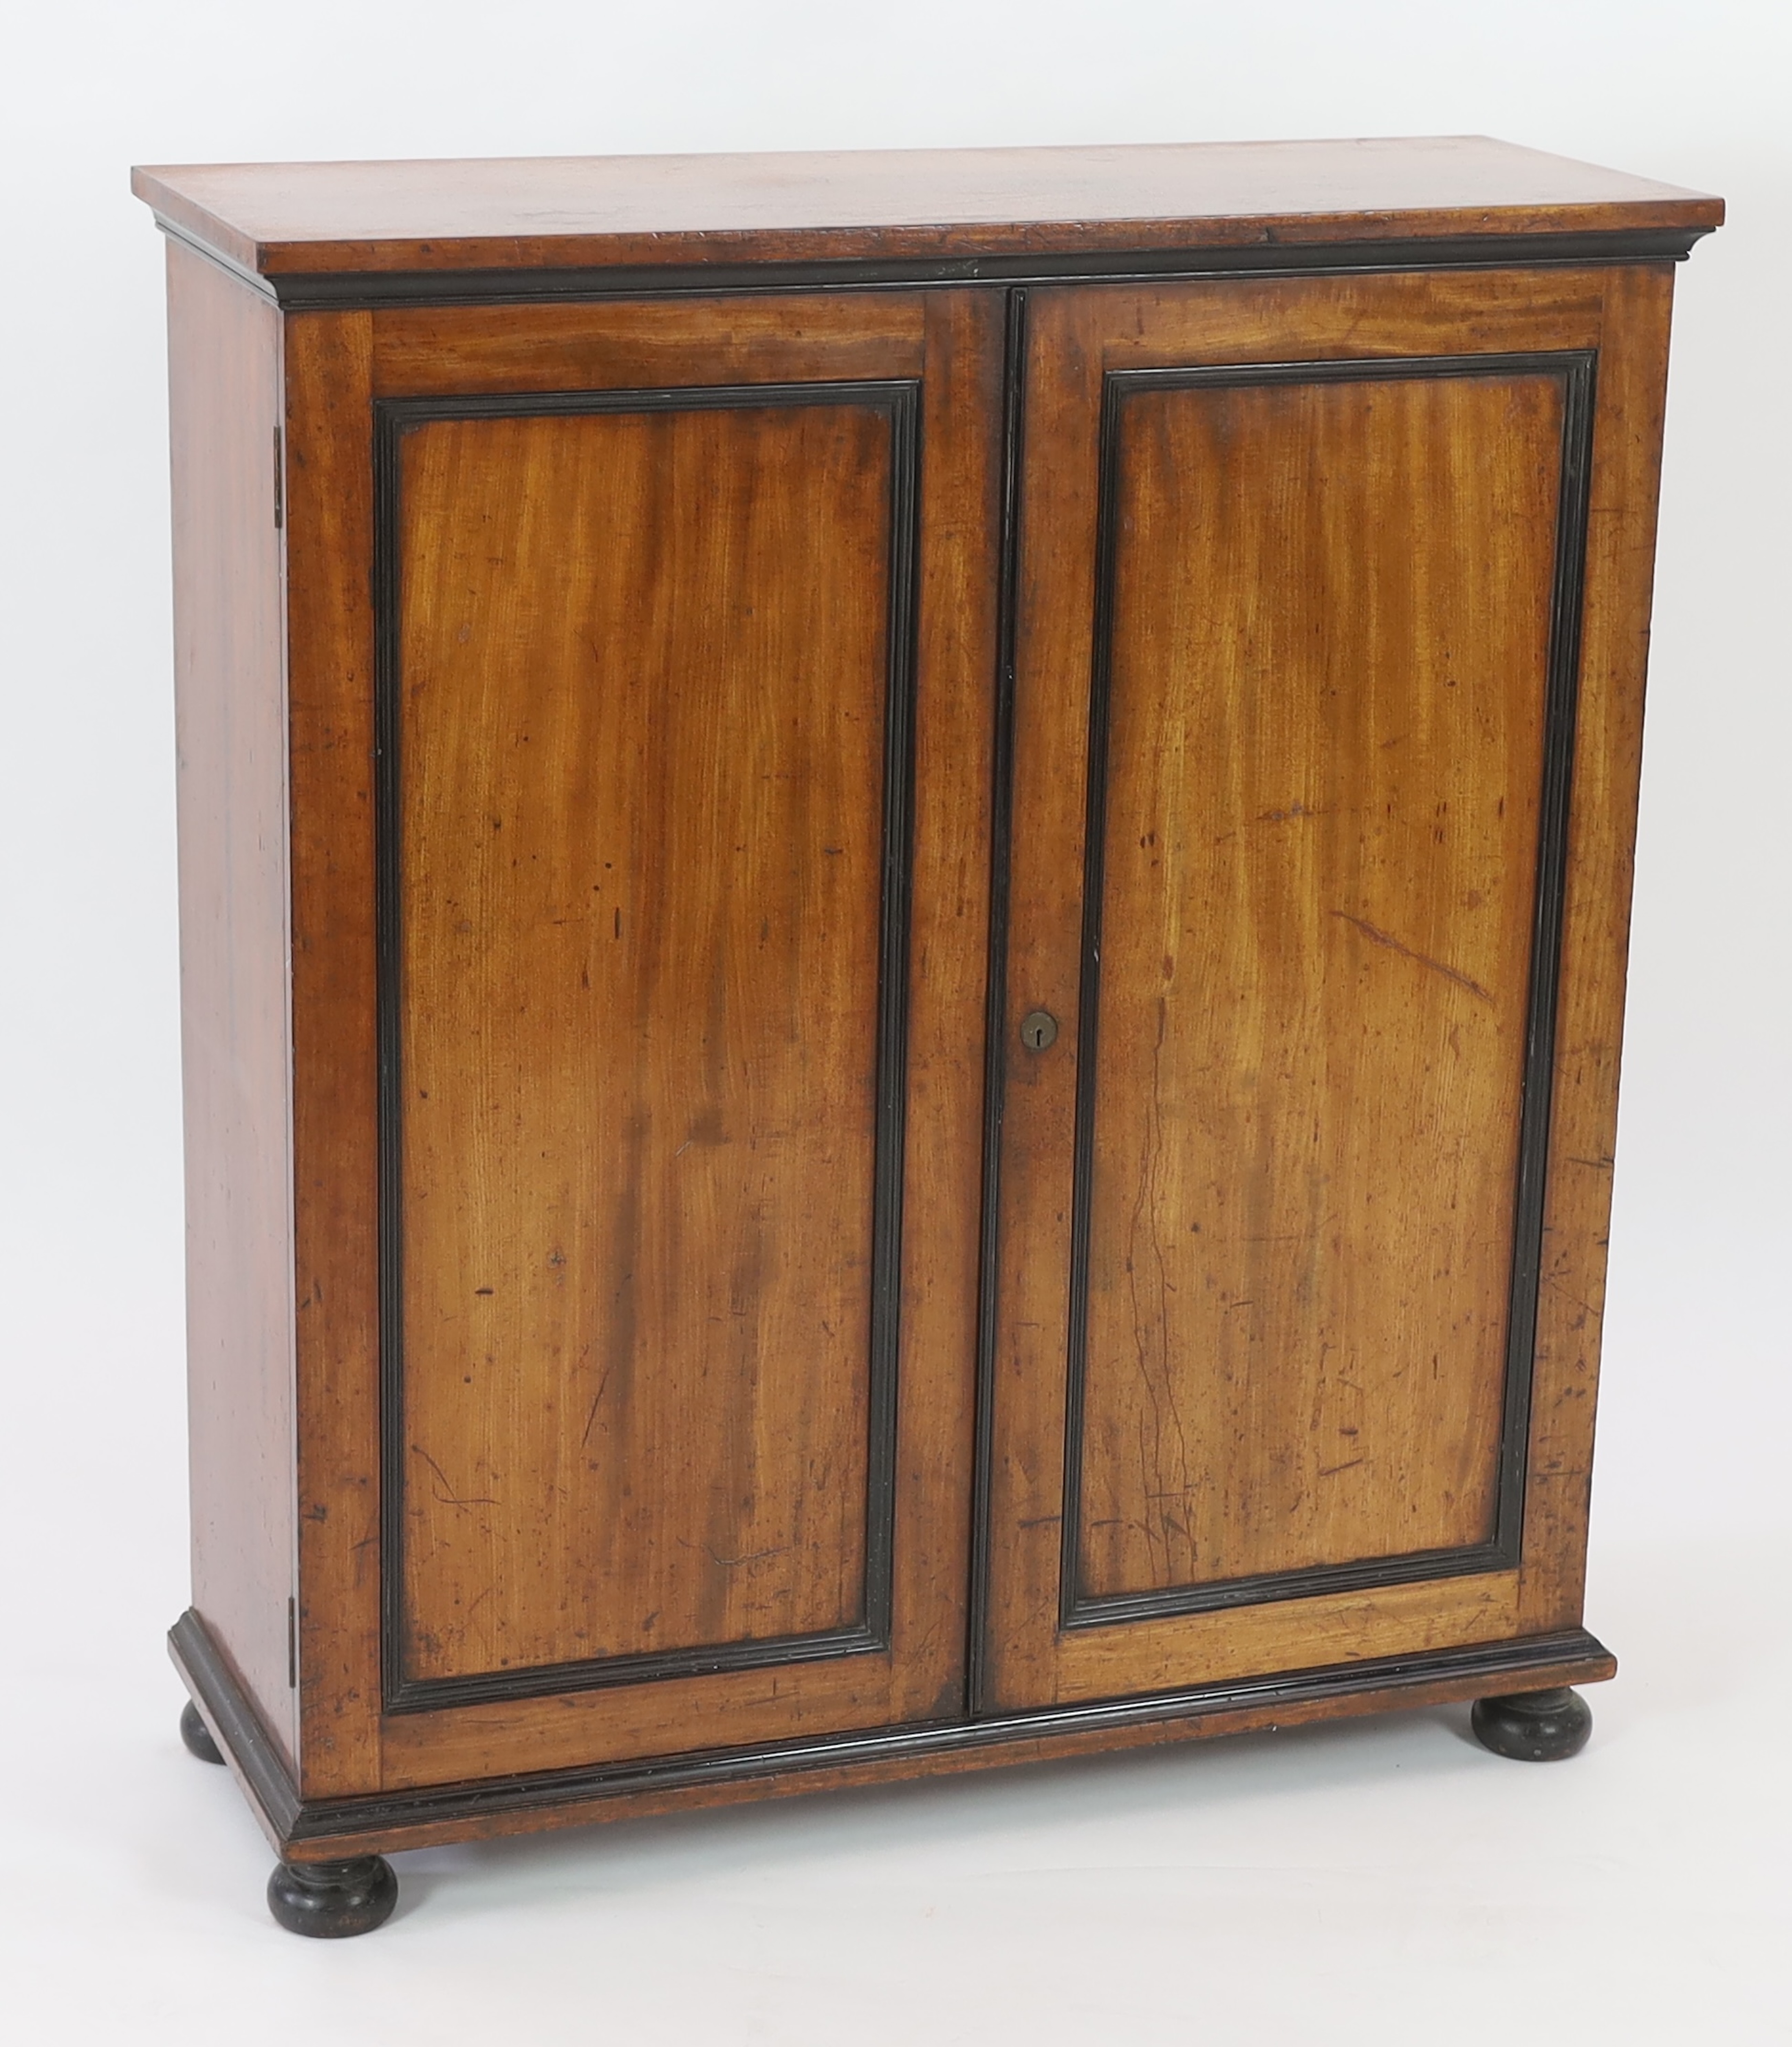 An unusual William IV ebony and mahogany cigar cabinet